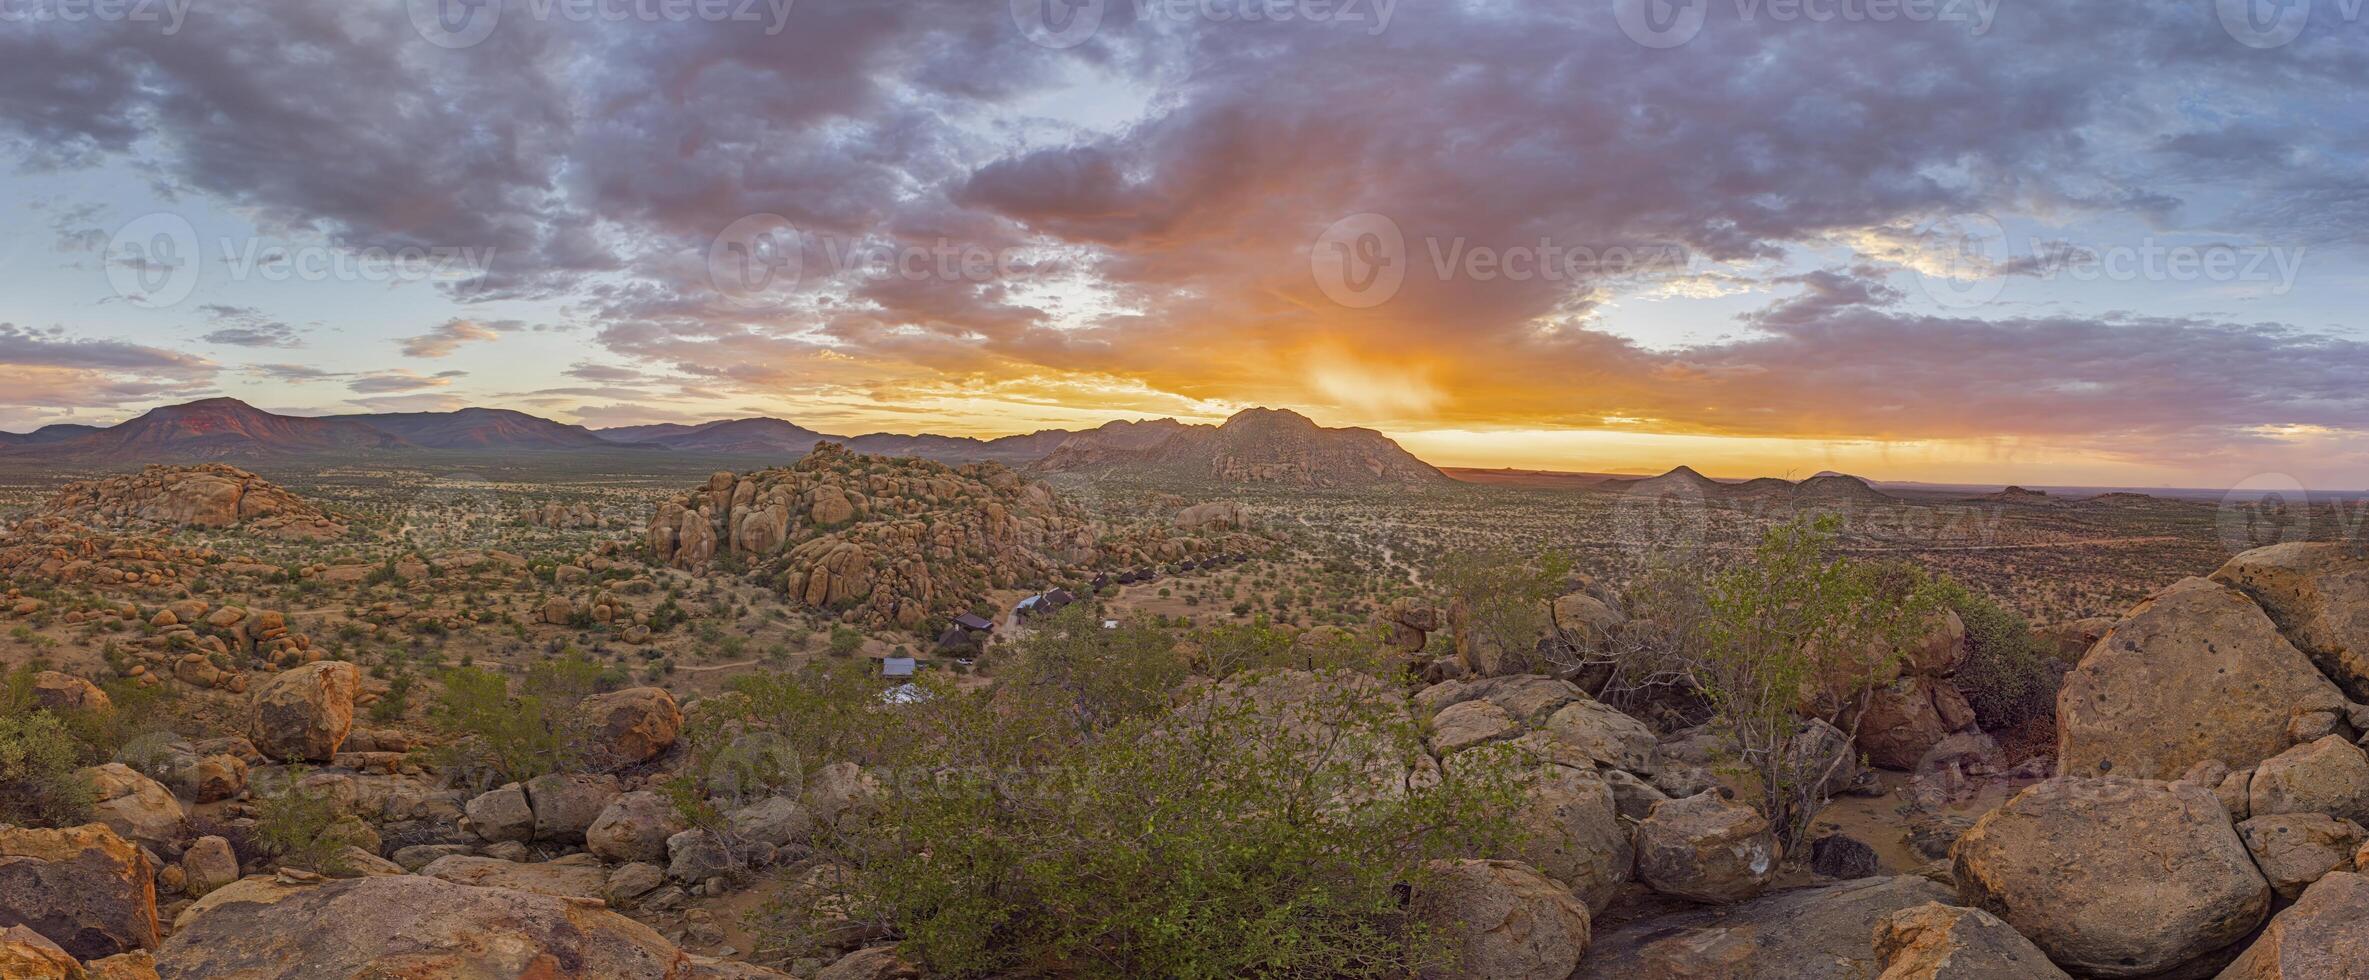 panorama- bild av damaraland i namibia under solnedgång foto